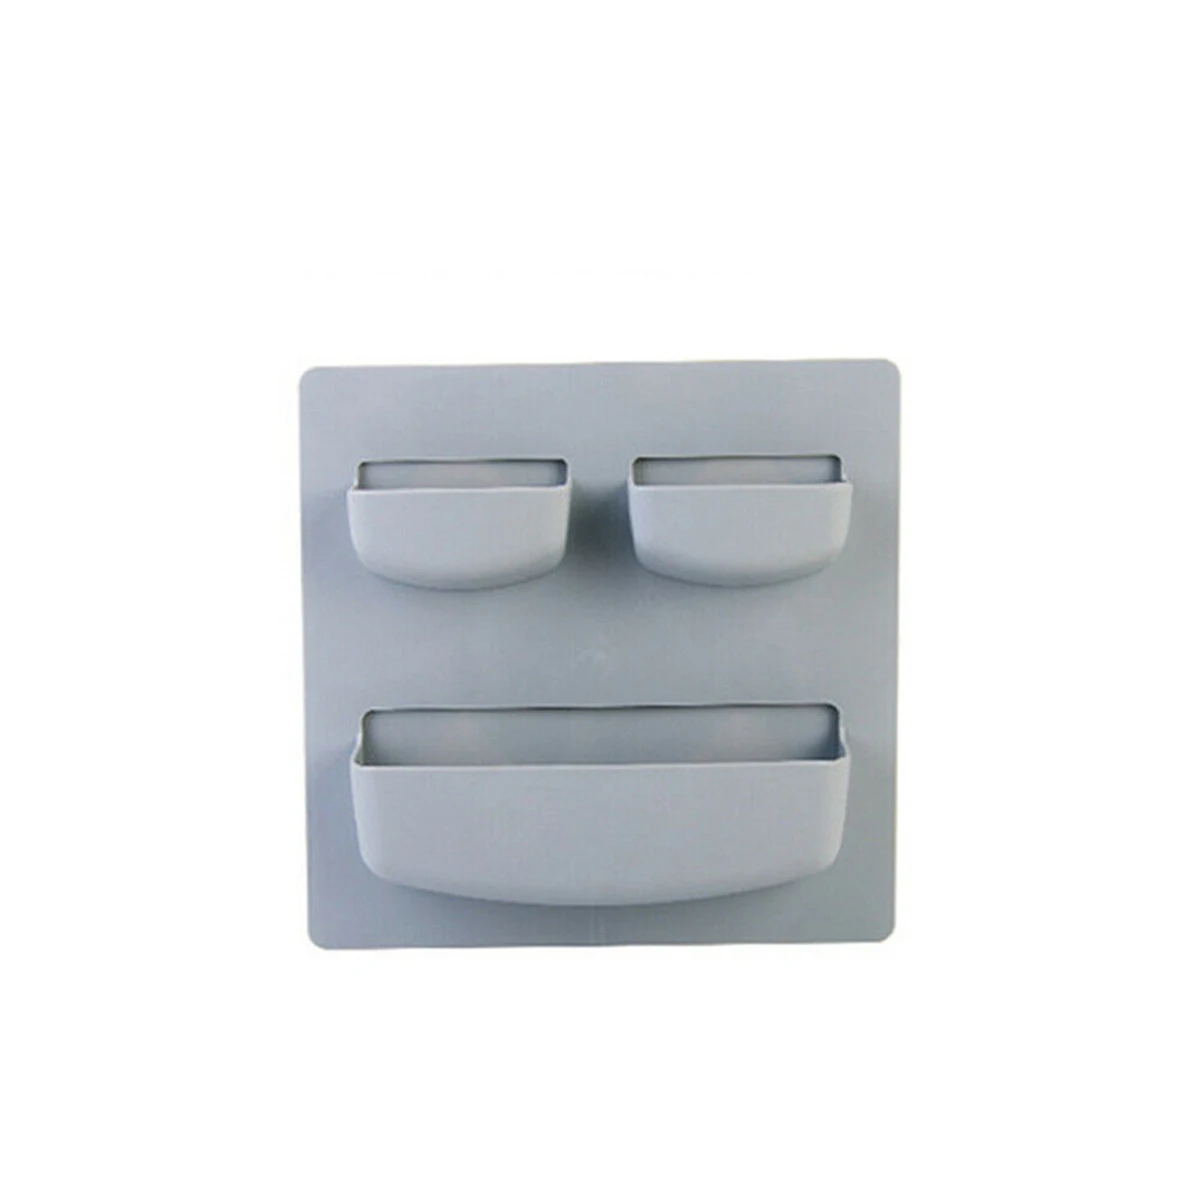 

Storage Rack, Wall-Mounted Commodity Shelf Storage Box for Kitchen Bathroom, Light Gray/Bluish Grey/Apricot